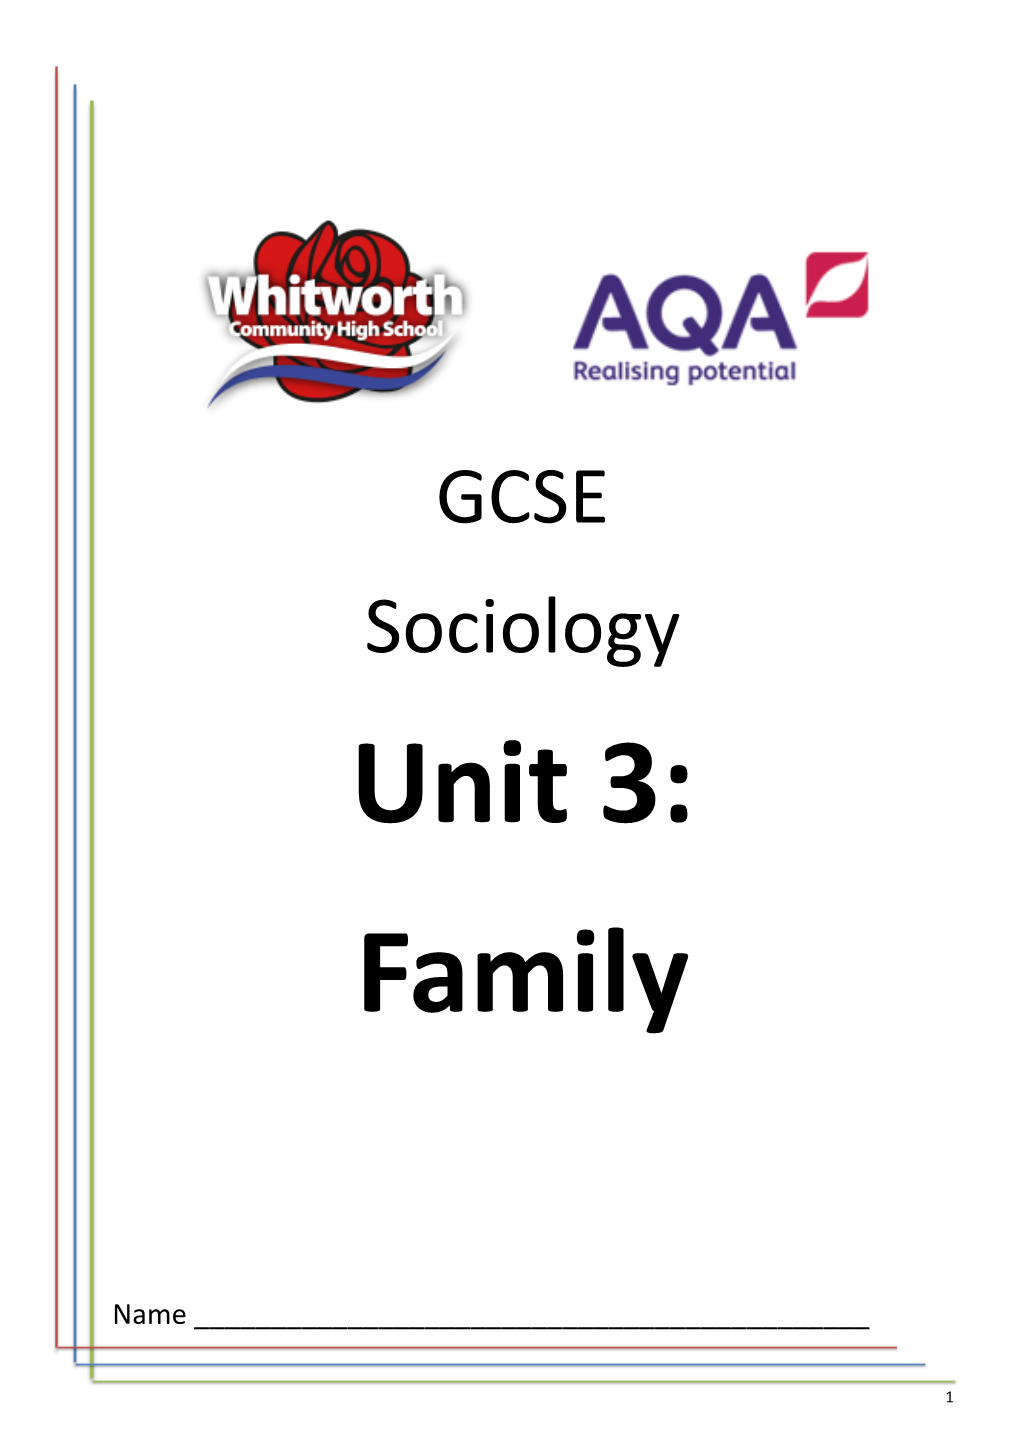 GCSE Sociology Unit 3: Family